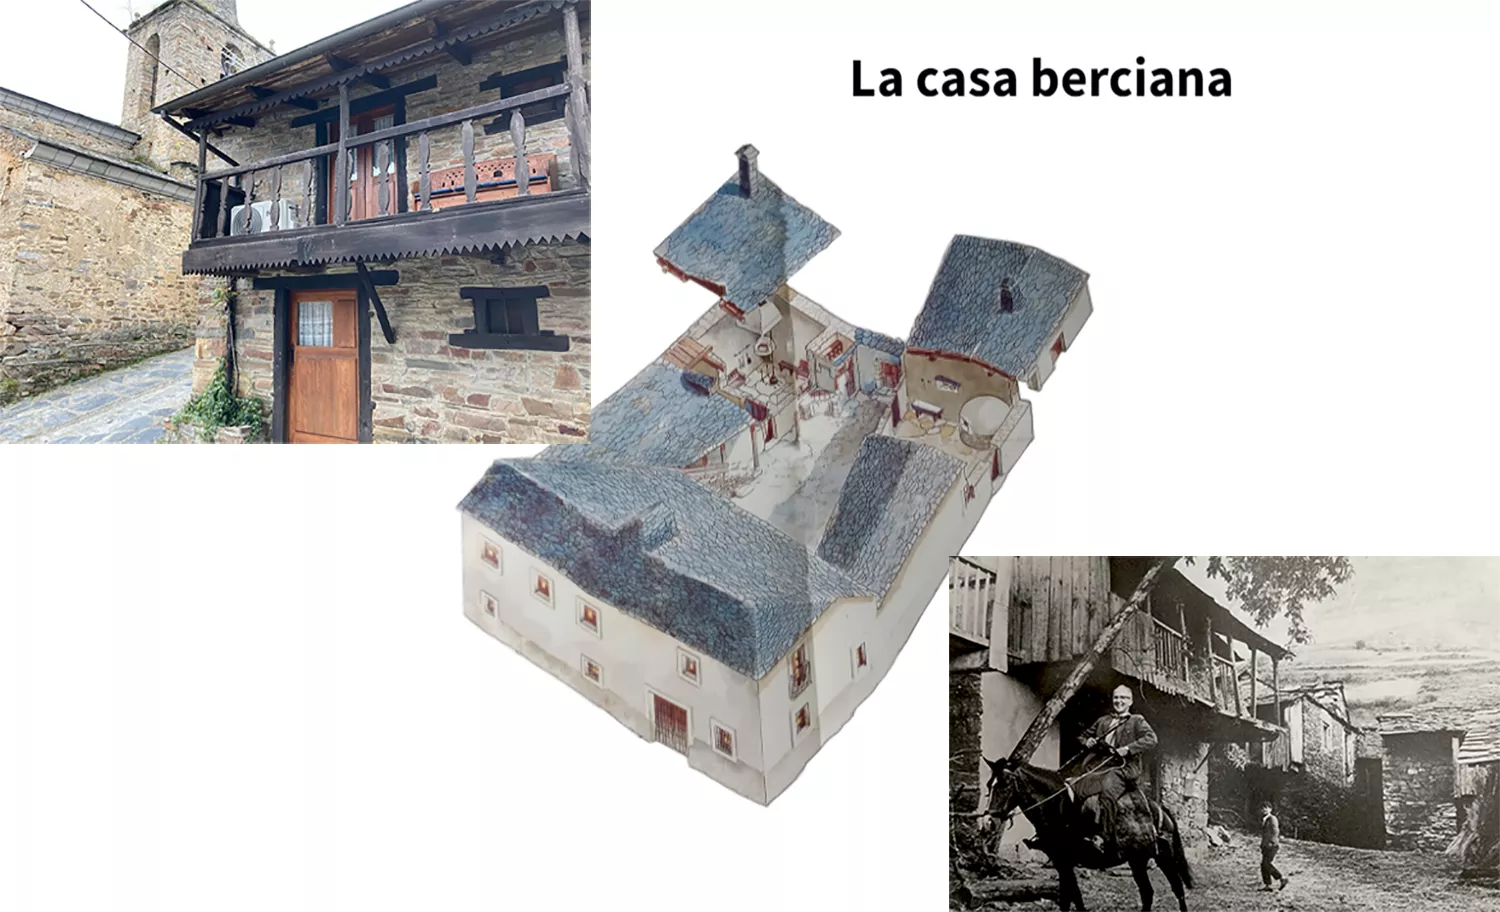 Ejemplos de arquitectura tradicional berciana.